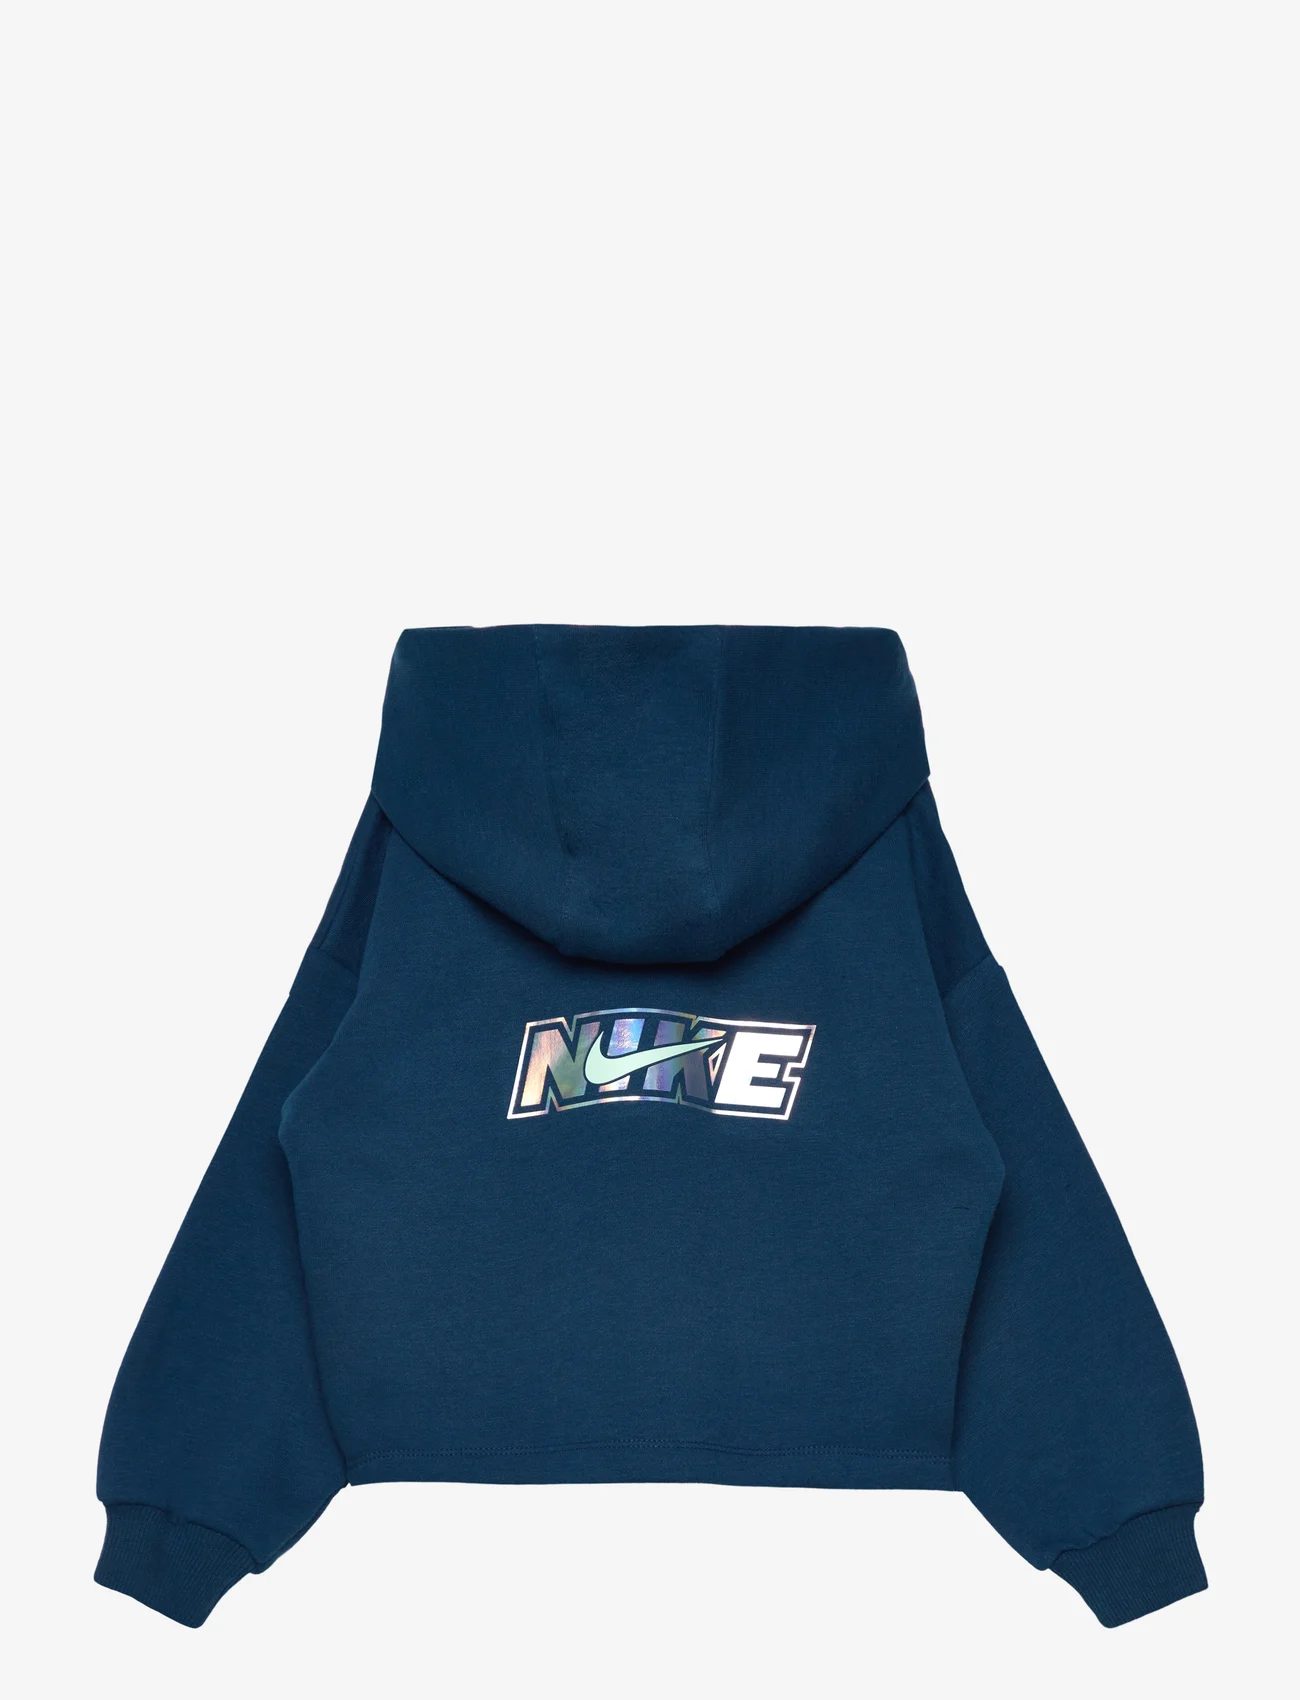 Nike - ICONCLASH PO - hoodies - valerian blue - 1